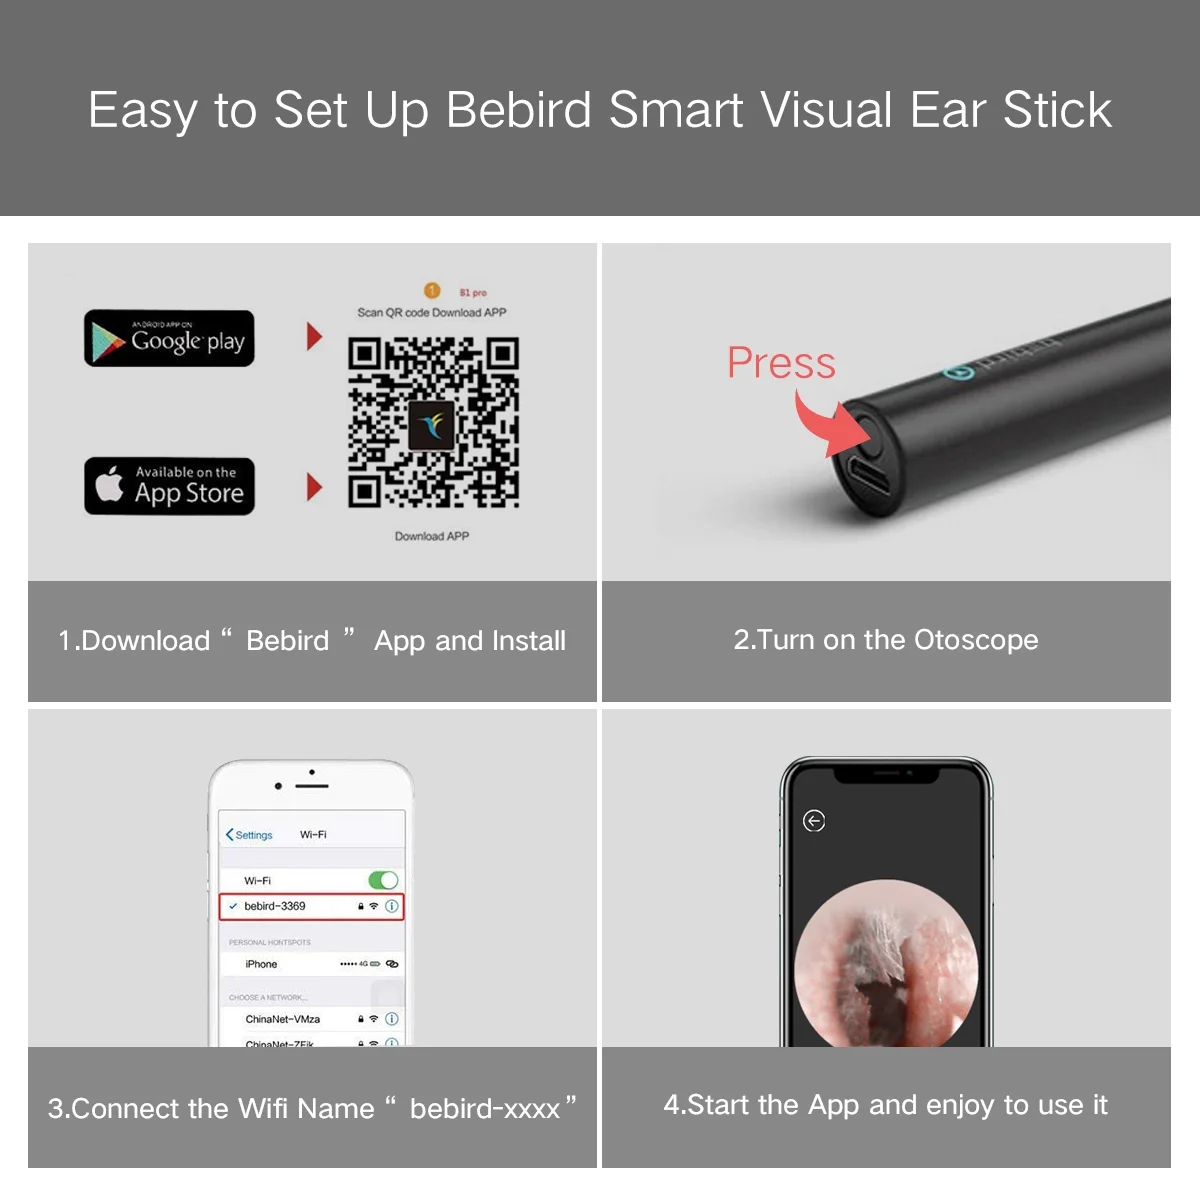 Xiaomi Youpin Ear WIFI Wireless Smart Visual Ear Cleaning Stick with Otoscope Endoscope Camera (Analog Camera 1920 x 1080 CCD Mini camera) 18